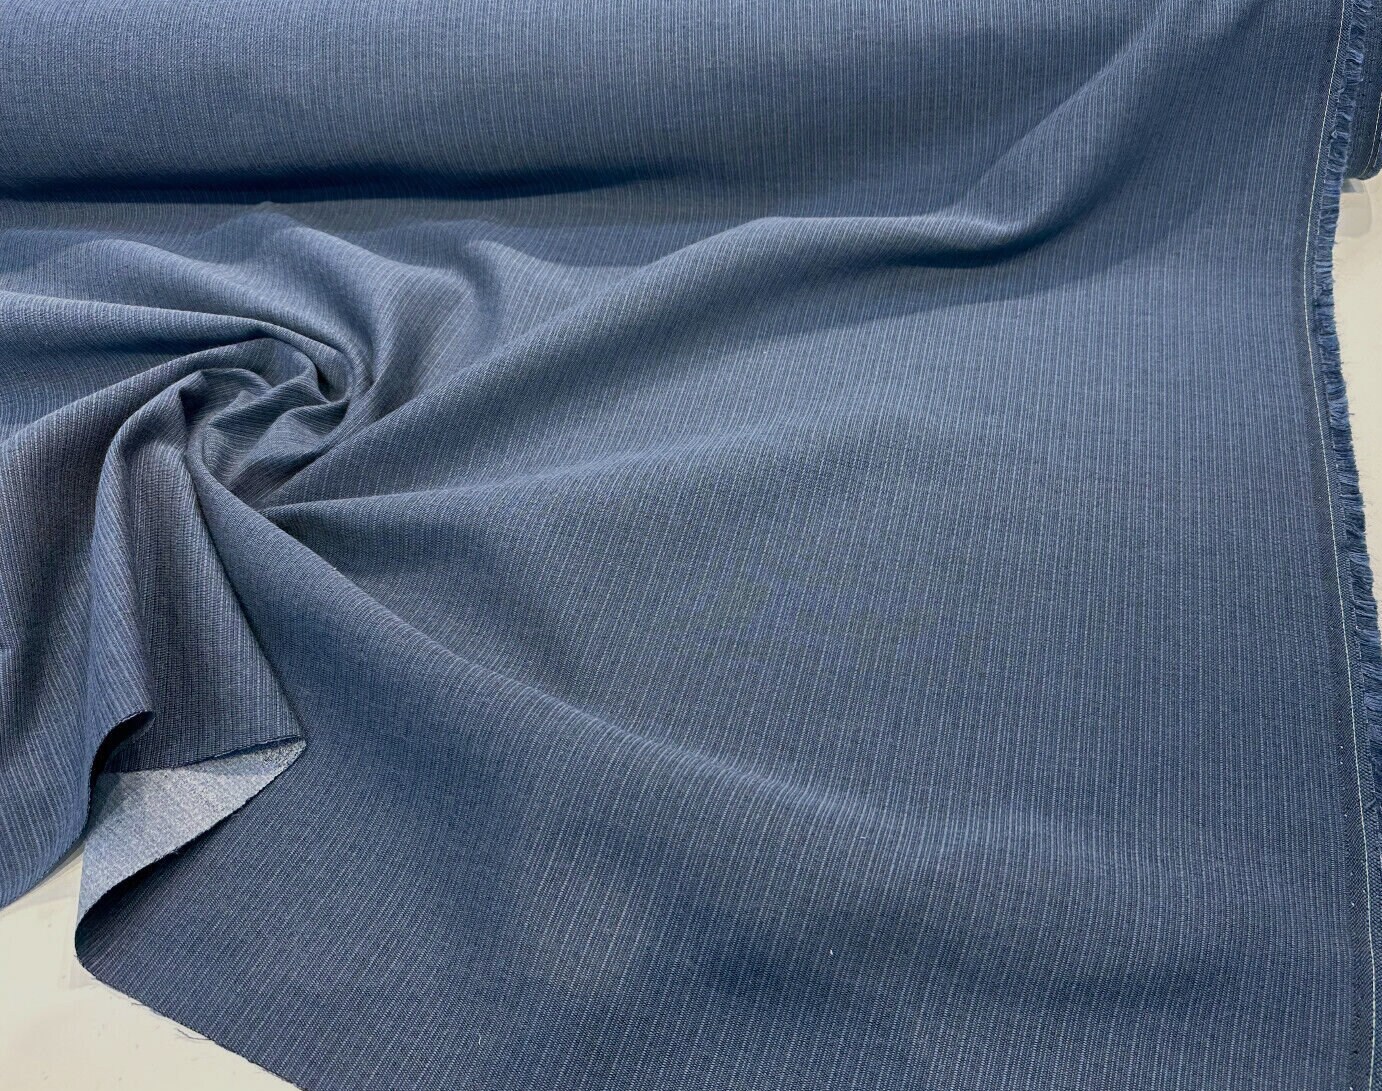 SAMPLE Sunbrella Fabric 